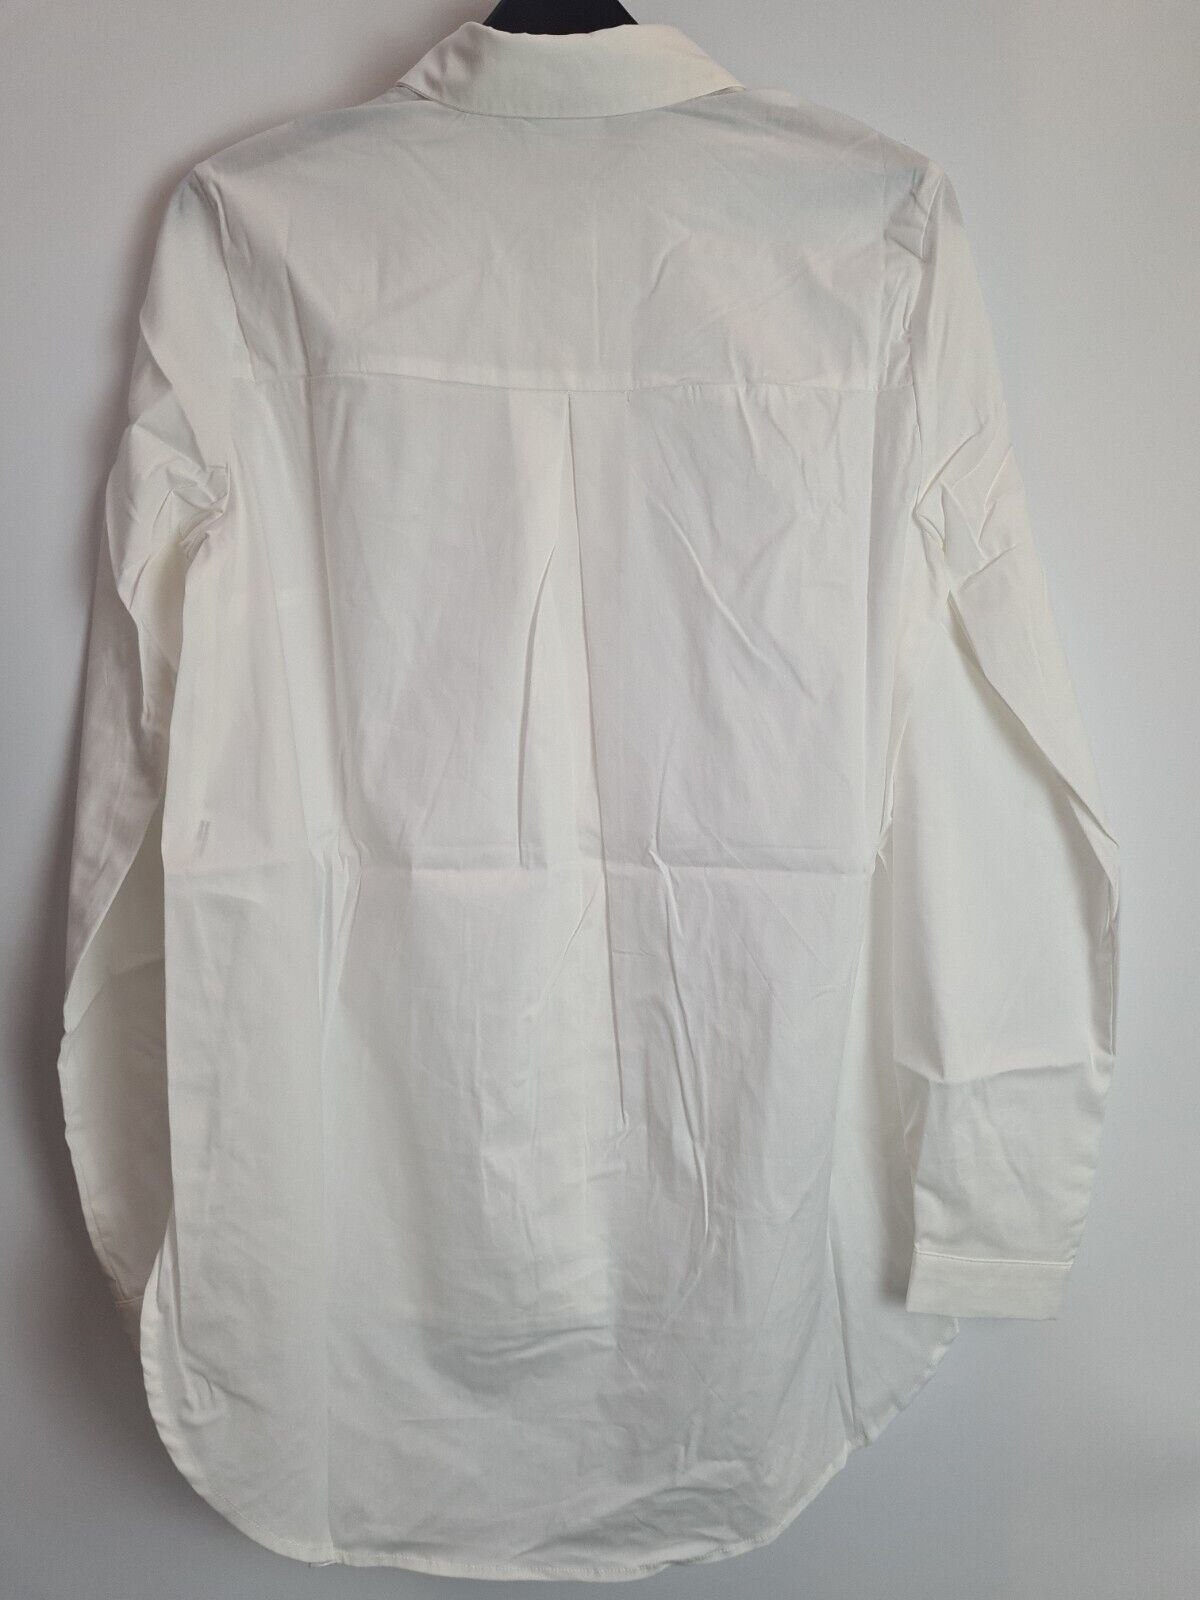 Vila White Vigimas Shirt Size 6.